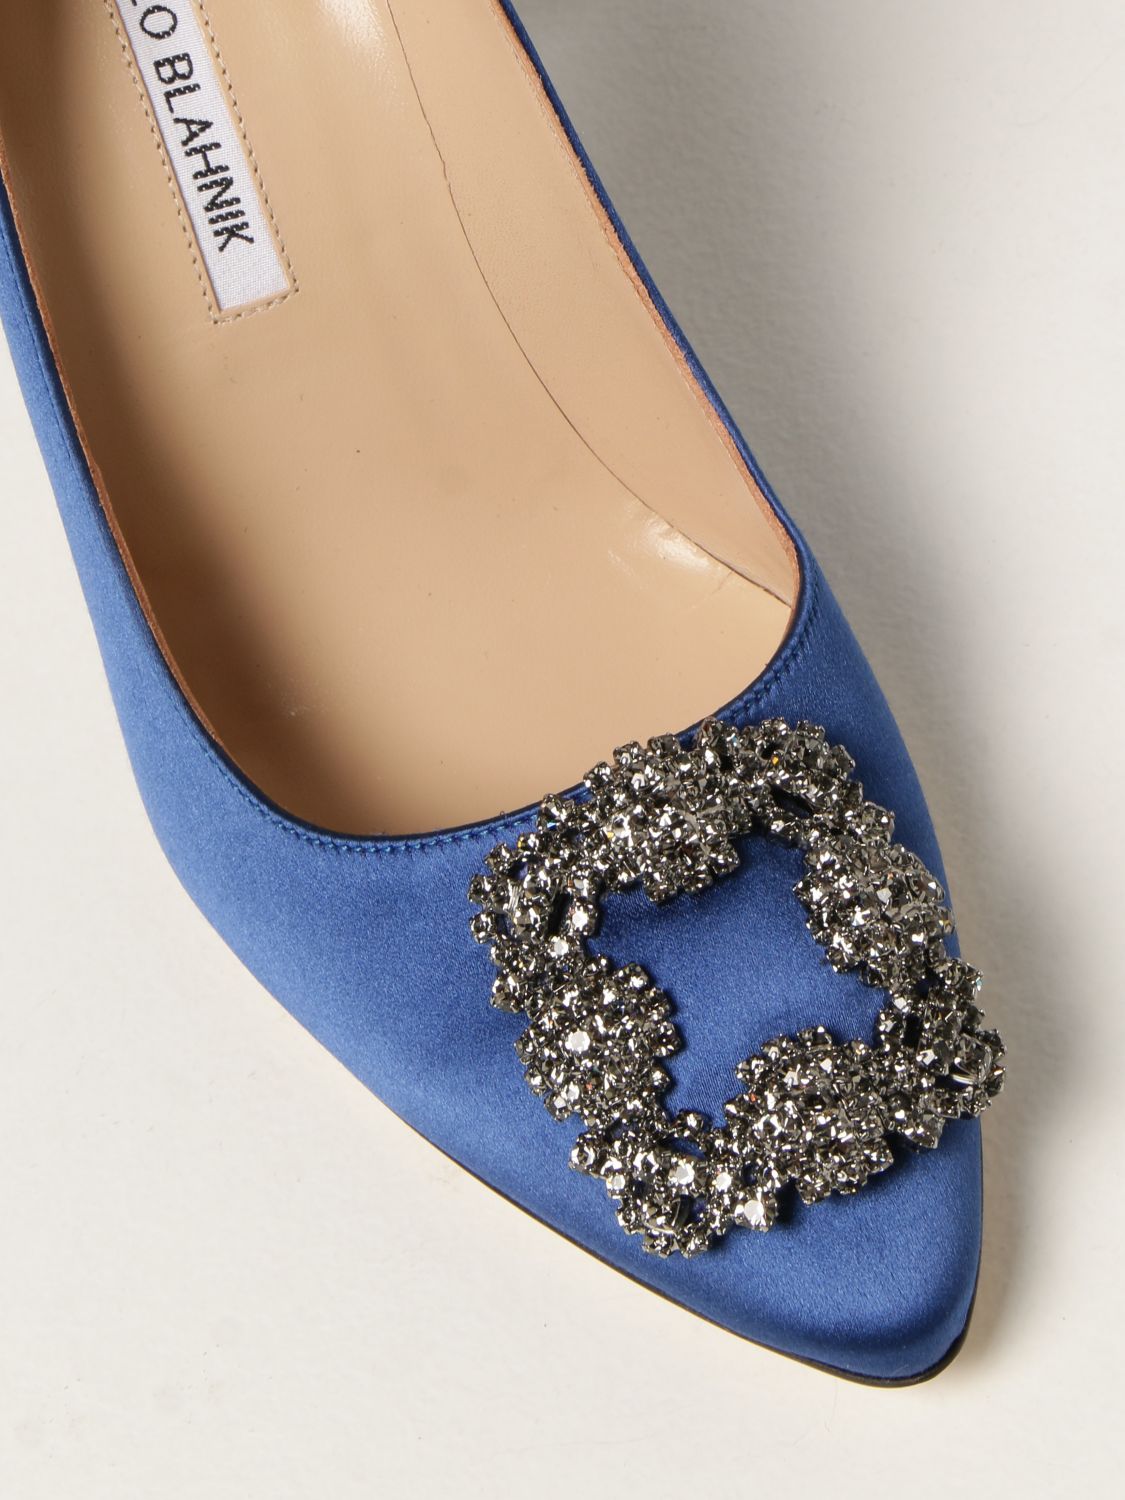 Escarpins Manolo Blahnik: Chaussures femme Manolo Blahnik bleu royal 4